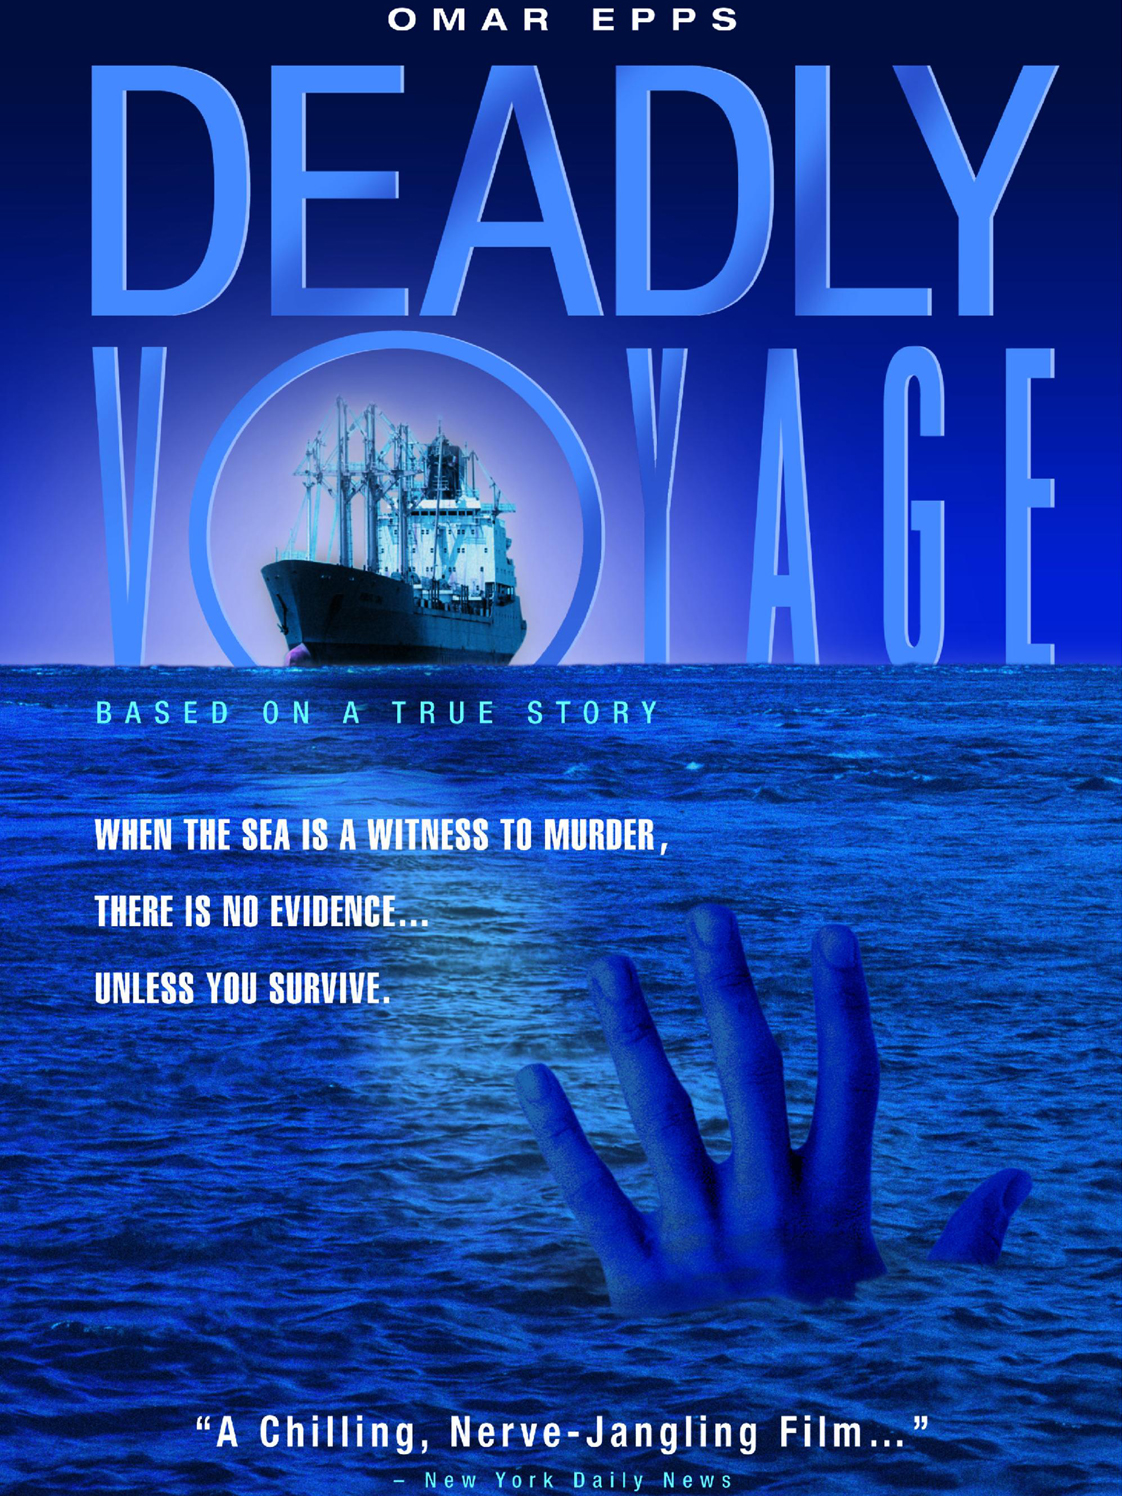 deadly voyage movie download netnaija